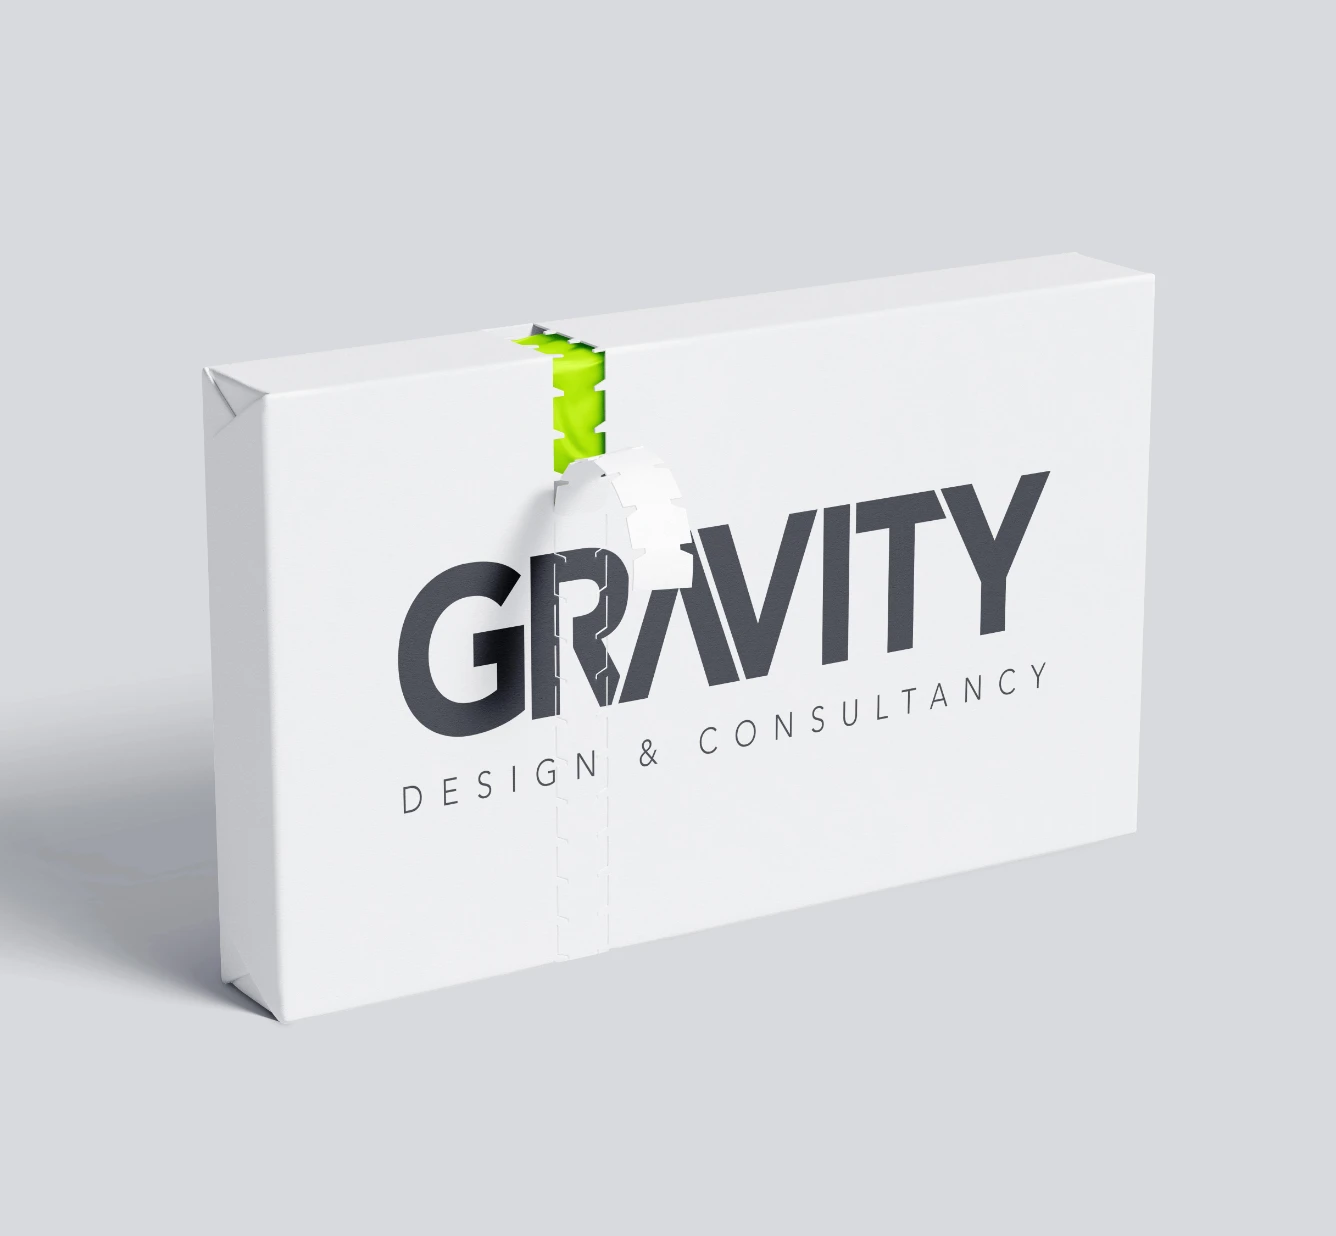 Gravity Creative Works